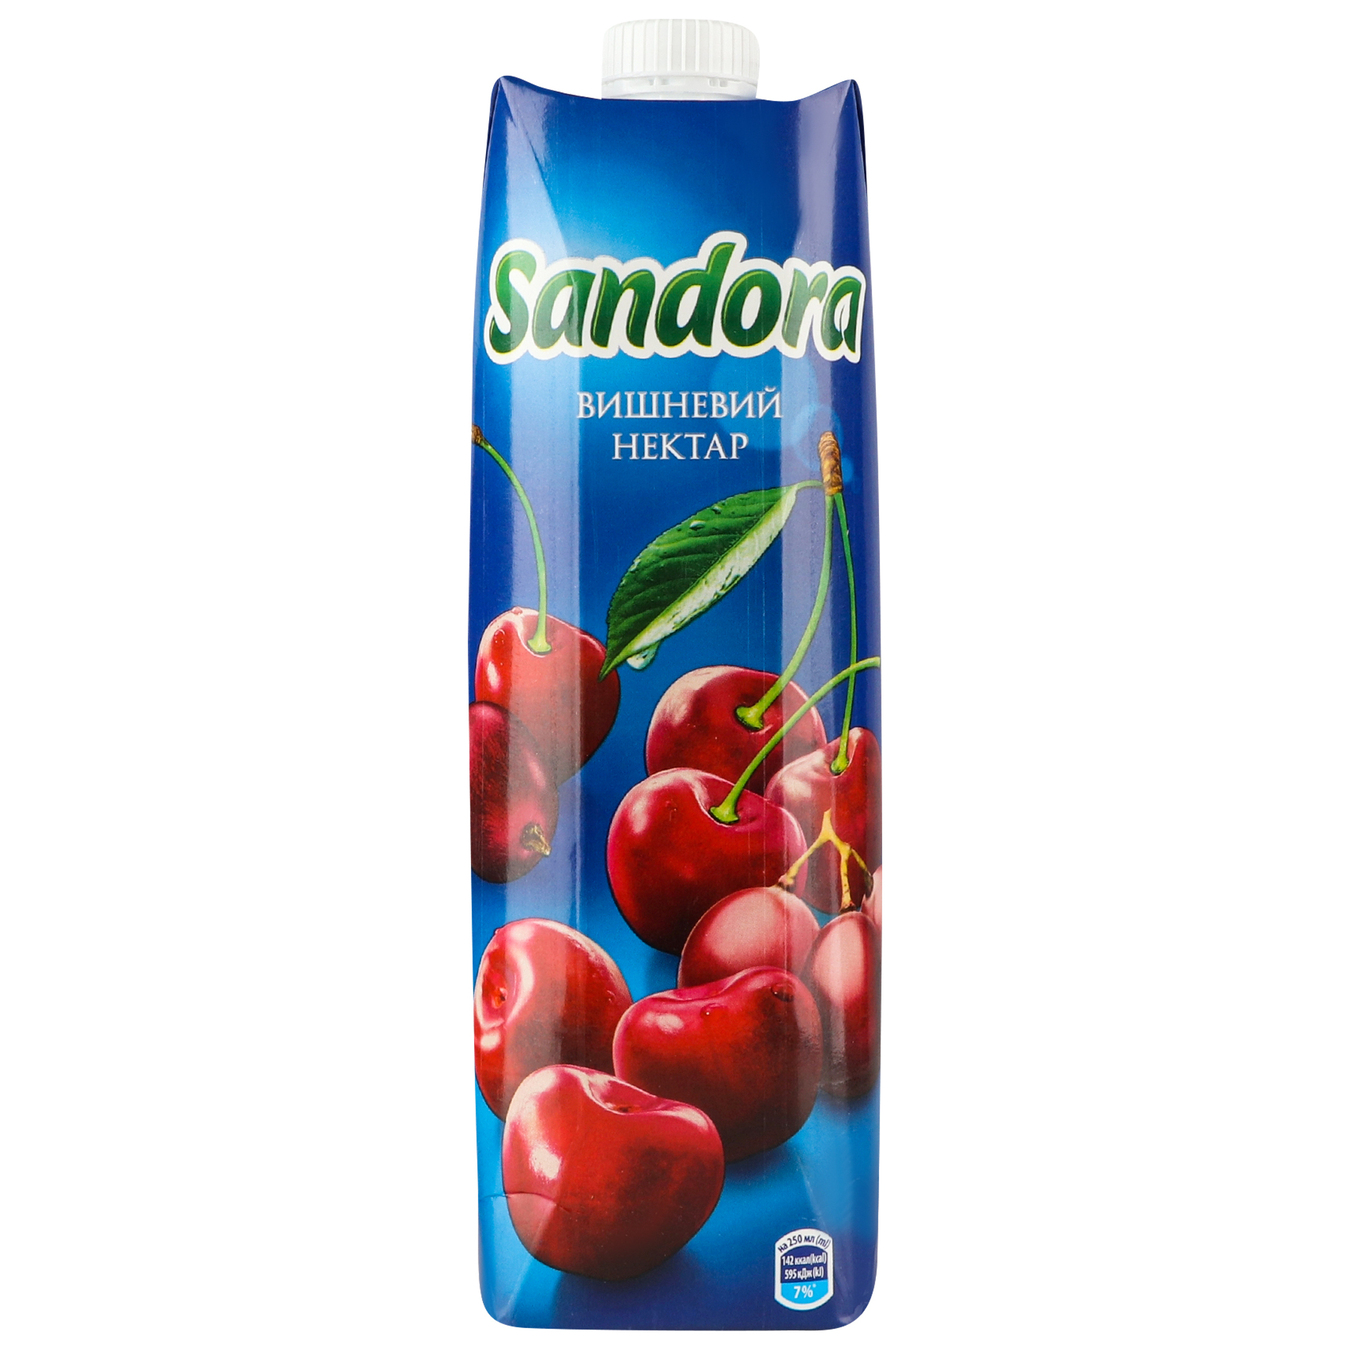 Sandora Cherry Nectar 0,95l